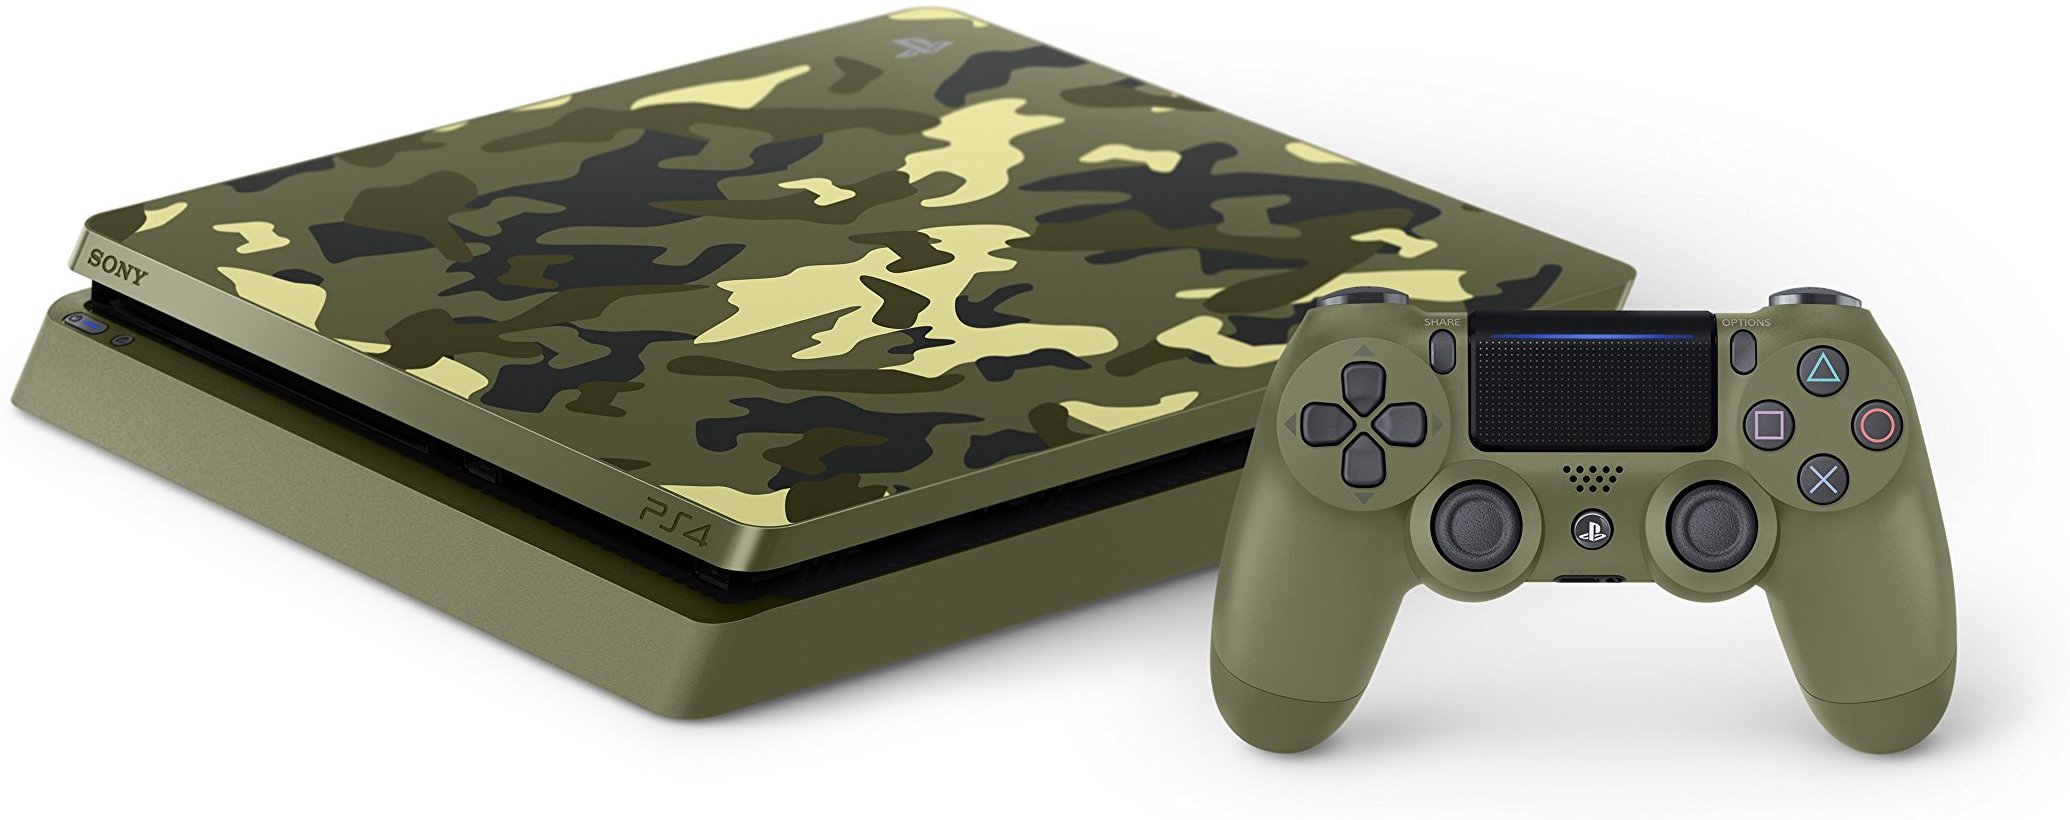 Sony PlayStation 4 1TB Call of Duty WWII Limited Edition Bundle, 3002200